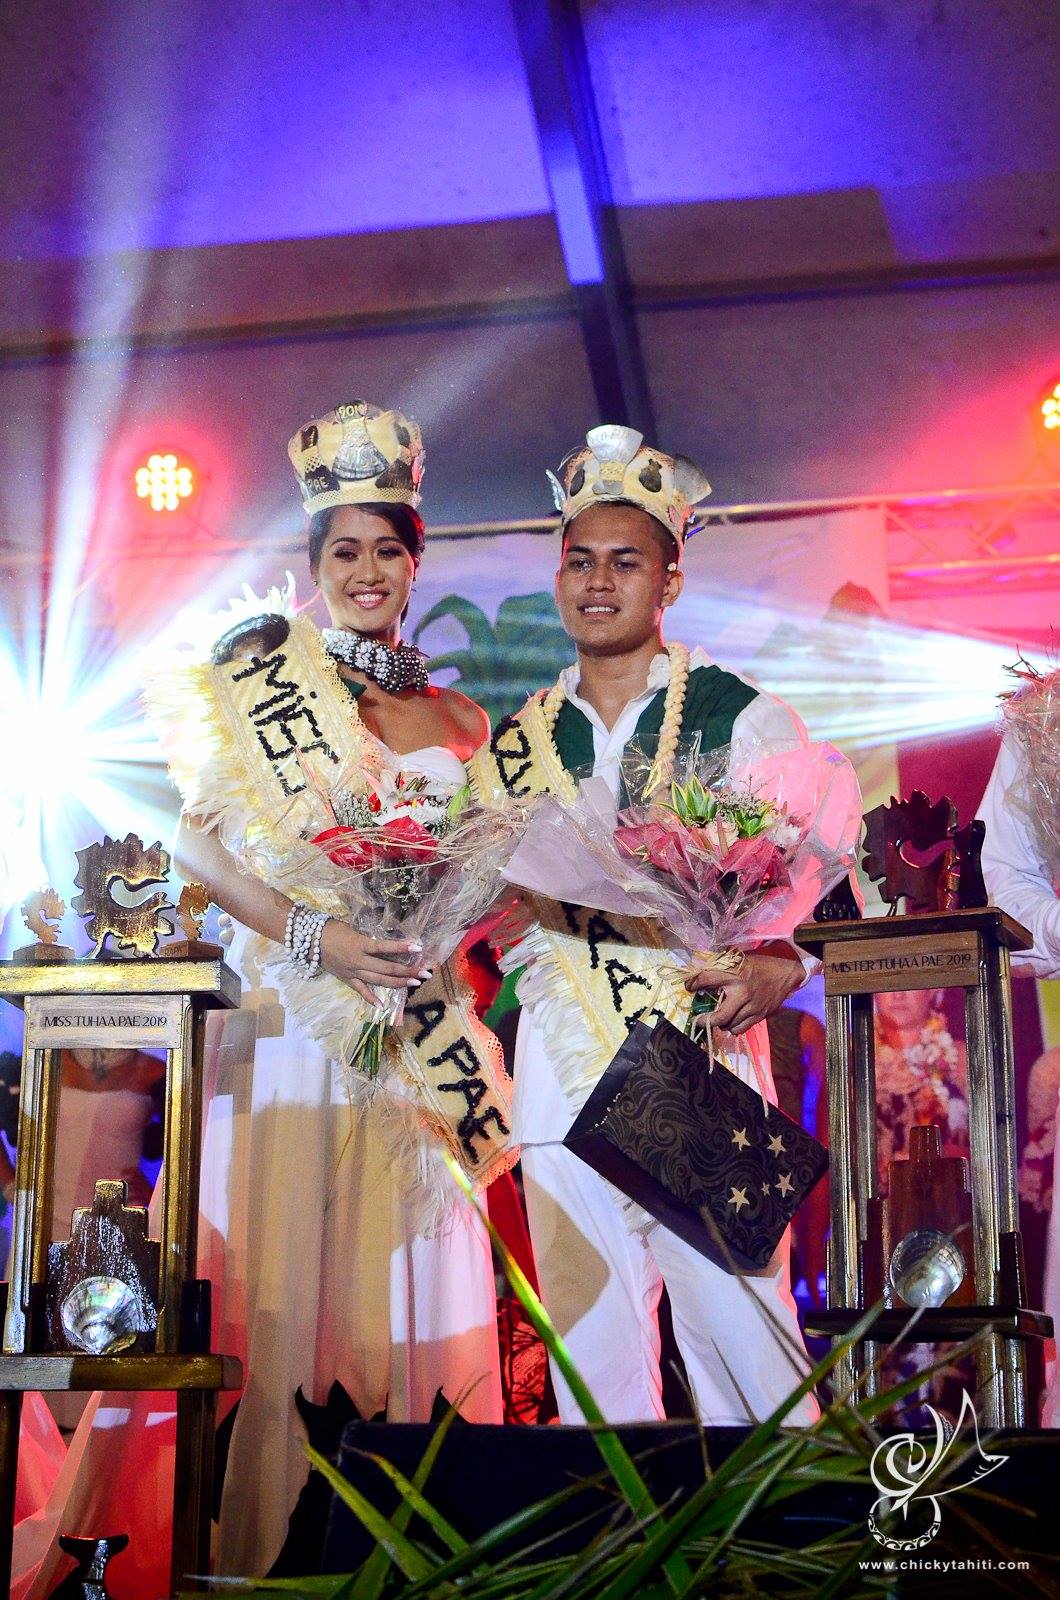 Lehani Fanaurai et Jordan Haatani ont été élus Miss et Mister Tuhaa Pae 2019.